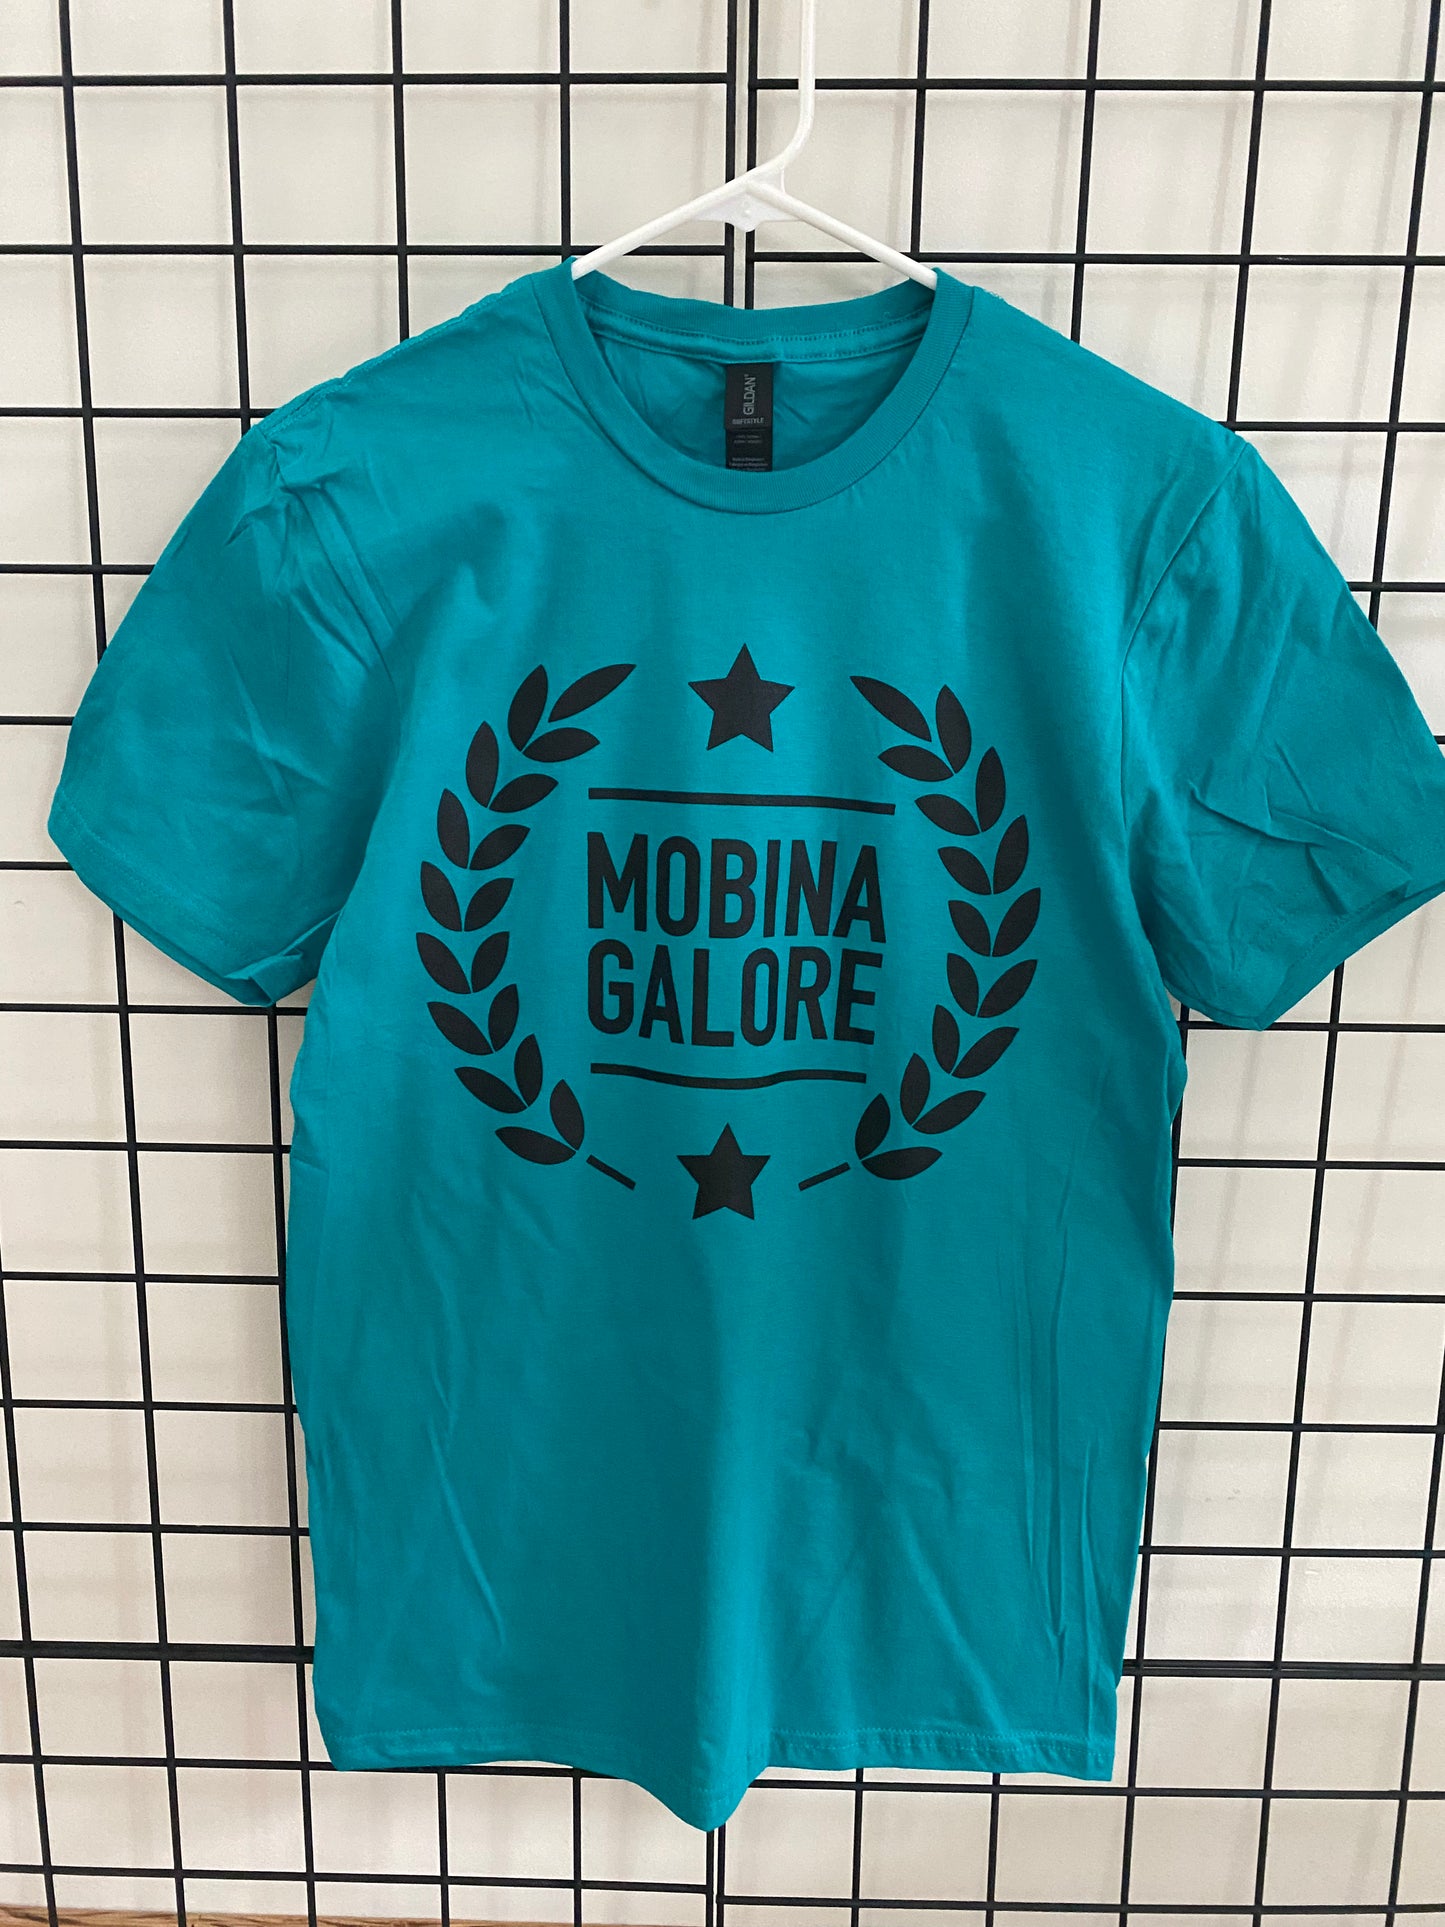 Mobina Galore - Turquoise T-Shirt